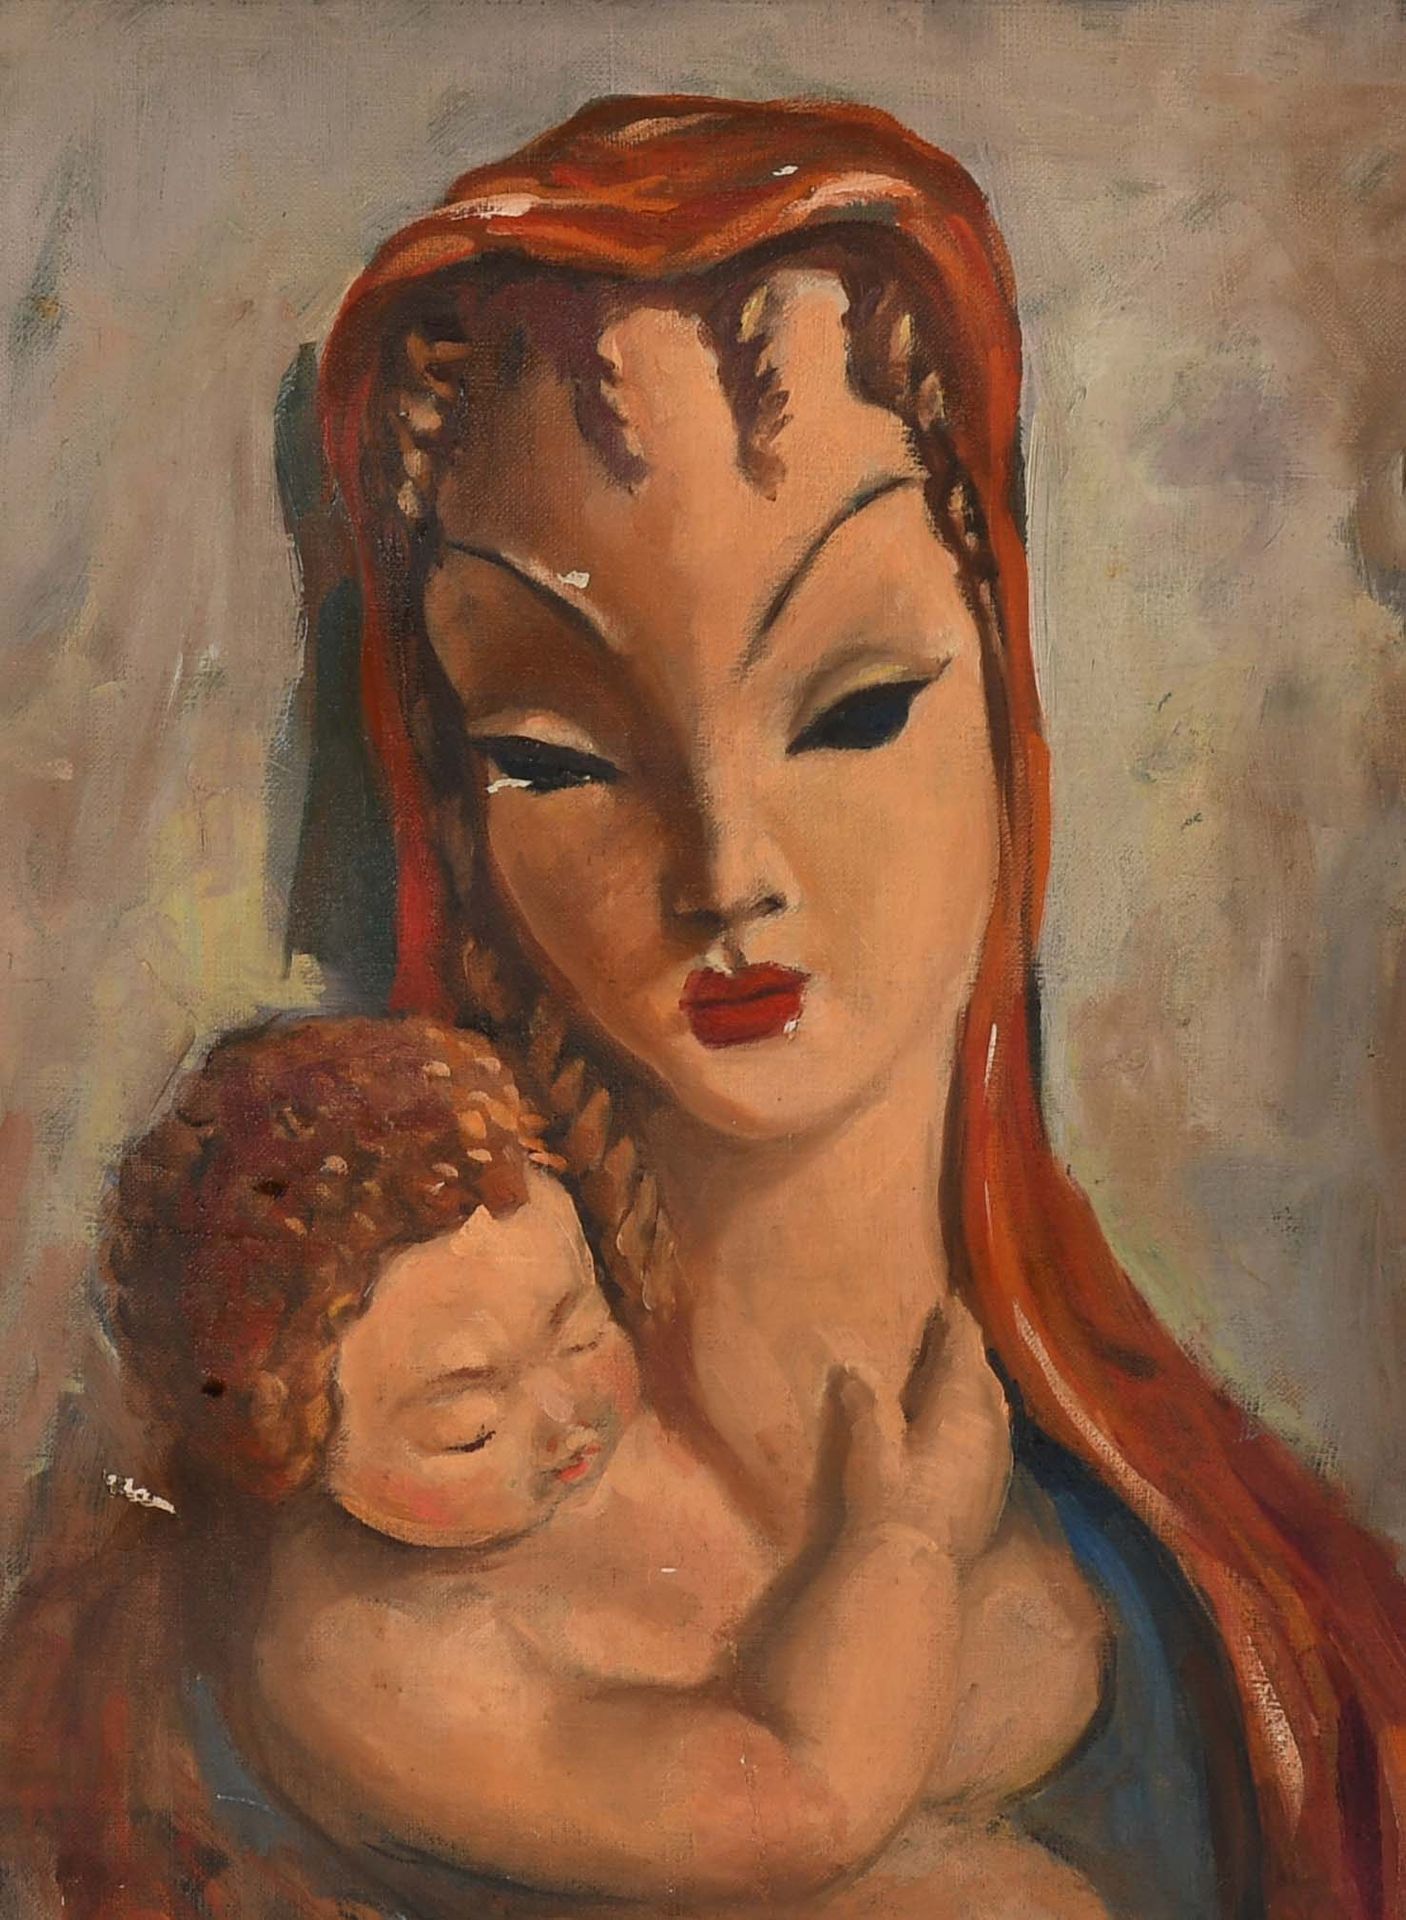 Null Pintar

Óleo sobre lienzo: "Maternidad".

Dimensiones: 42 cm x 32 cm.